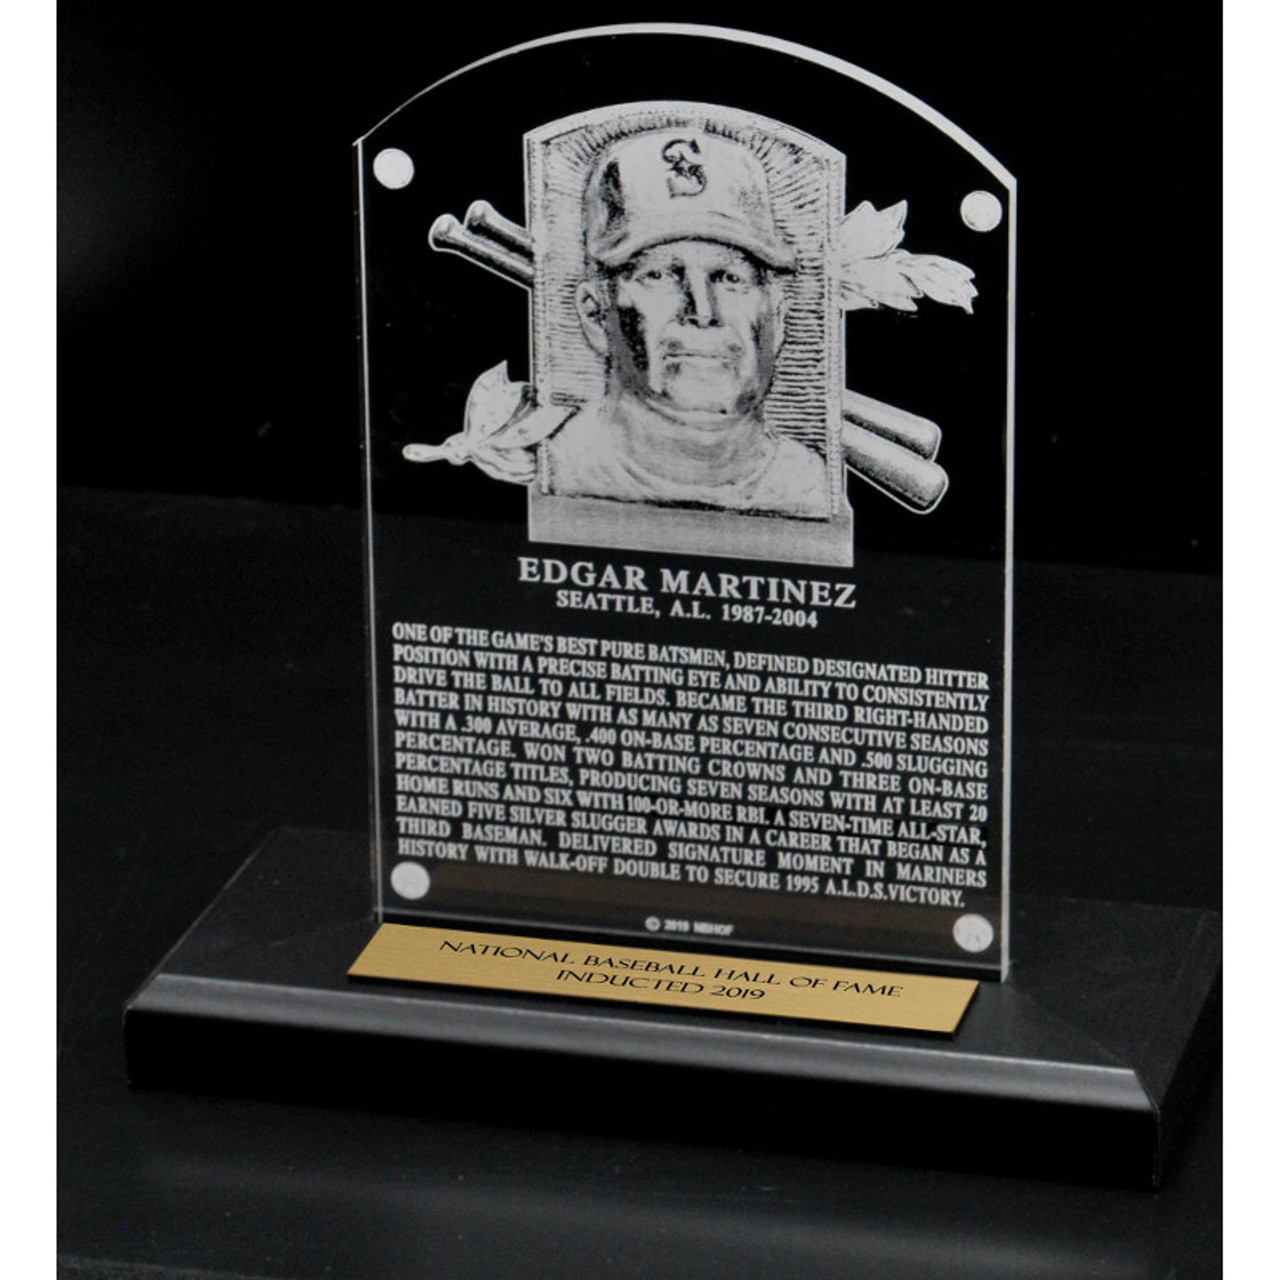 We got Edgar Martinez into the Baseball Hall of Fame